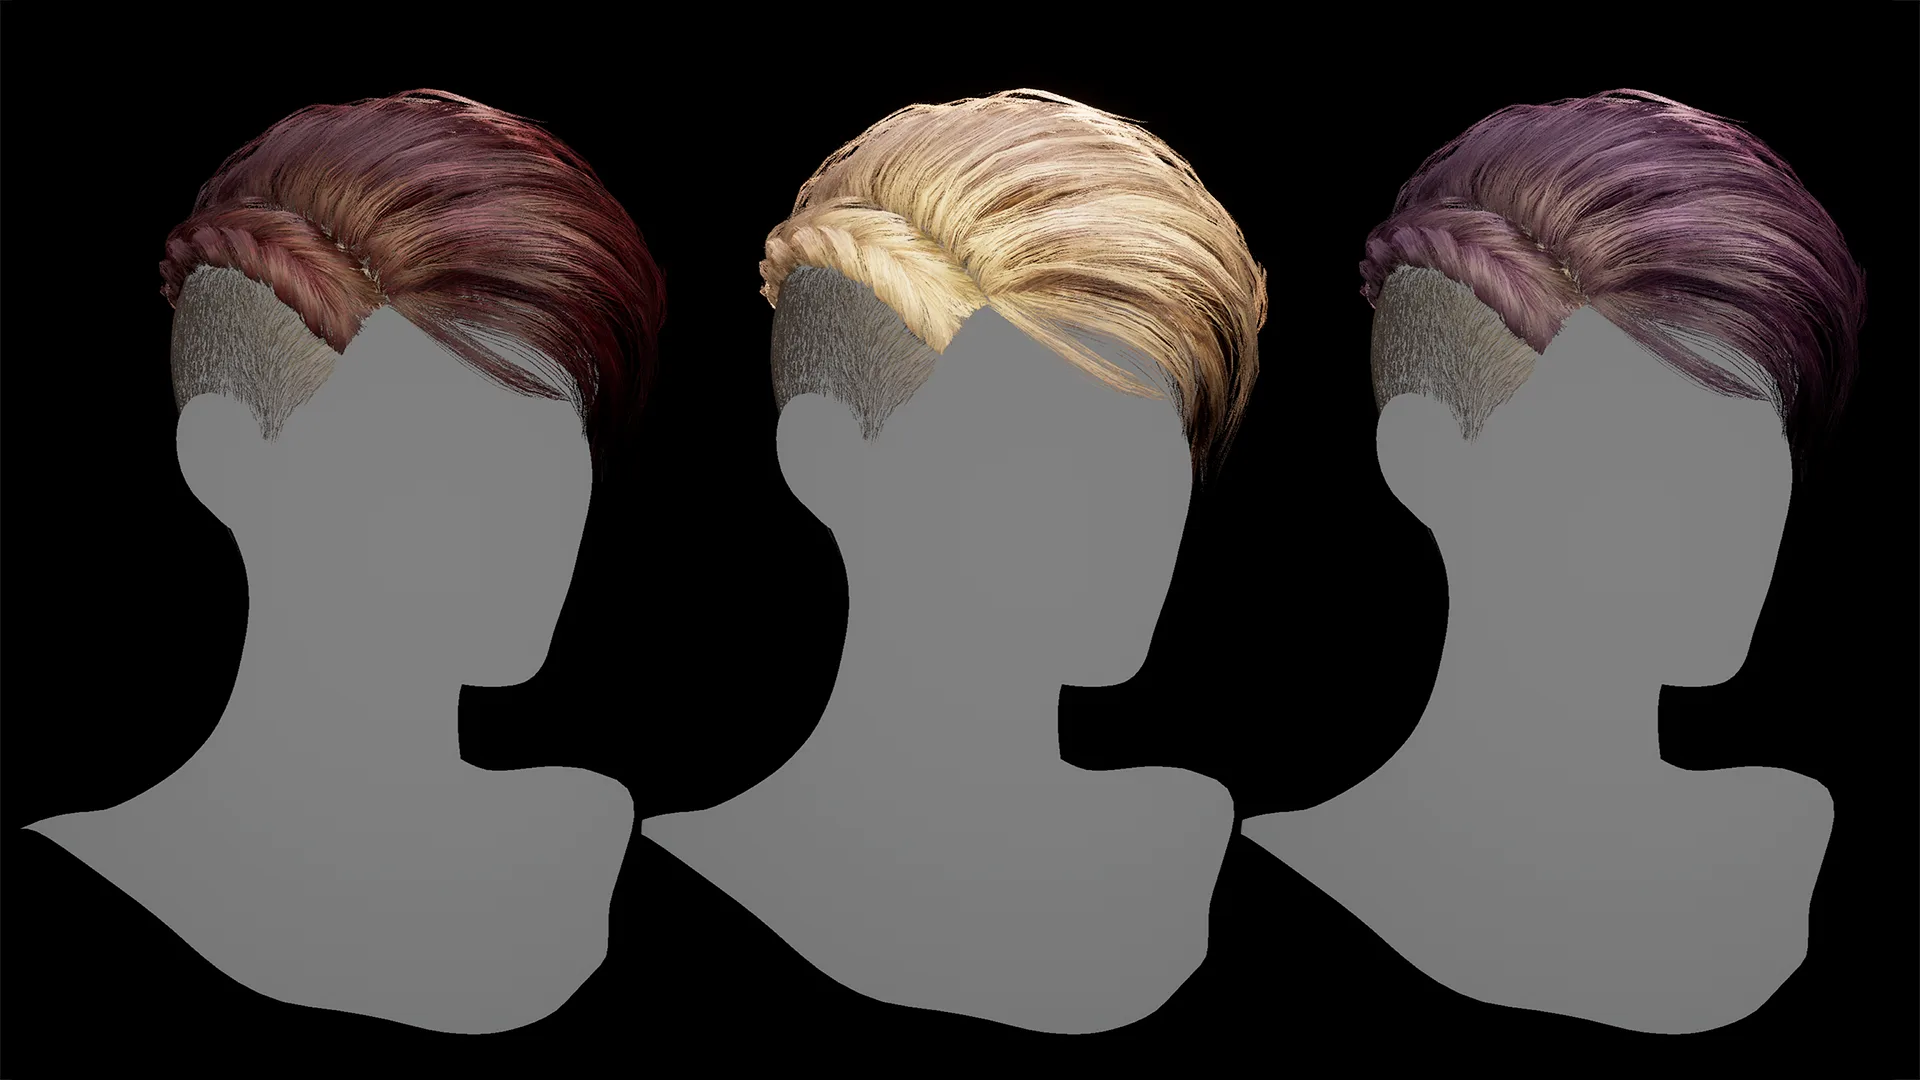 Low Poly Hair "Charlize" - FBX/OBJ + Maya, Blender source file, 4K Textures